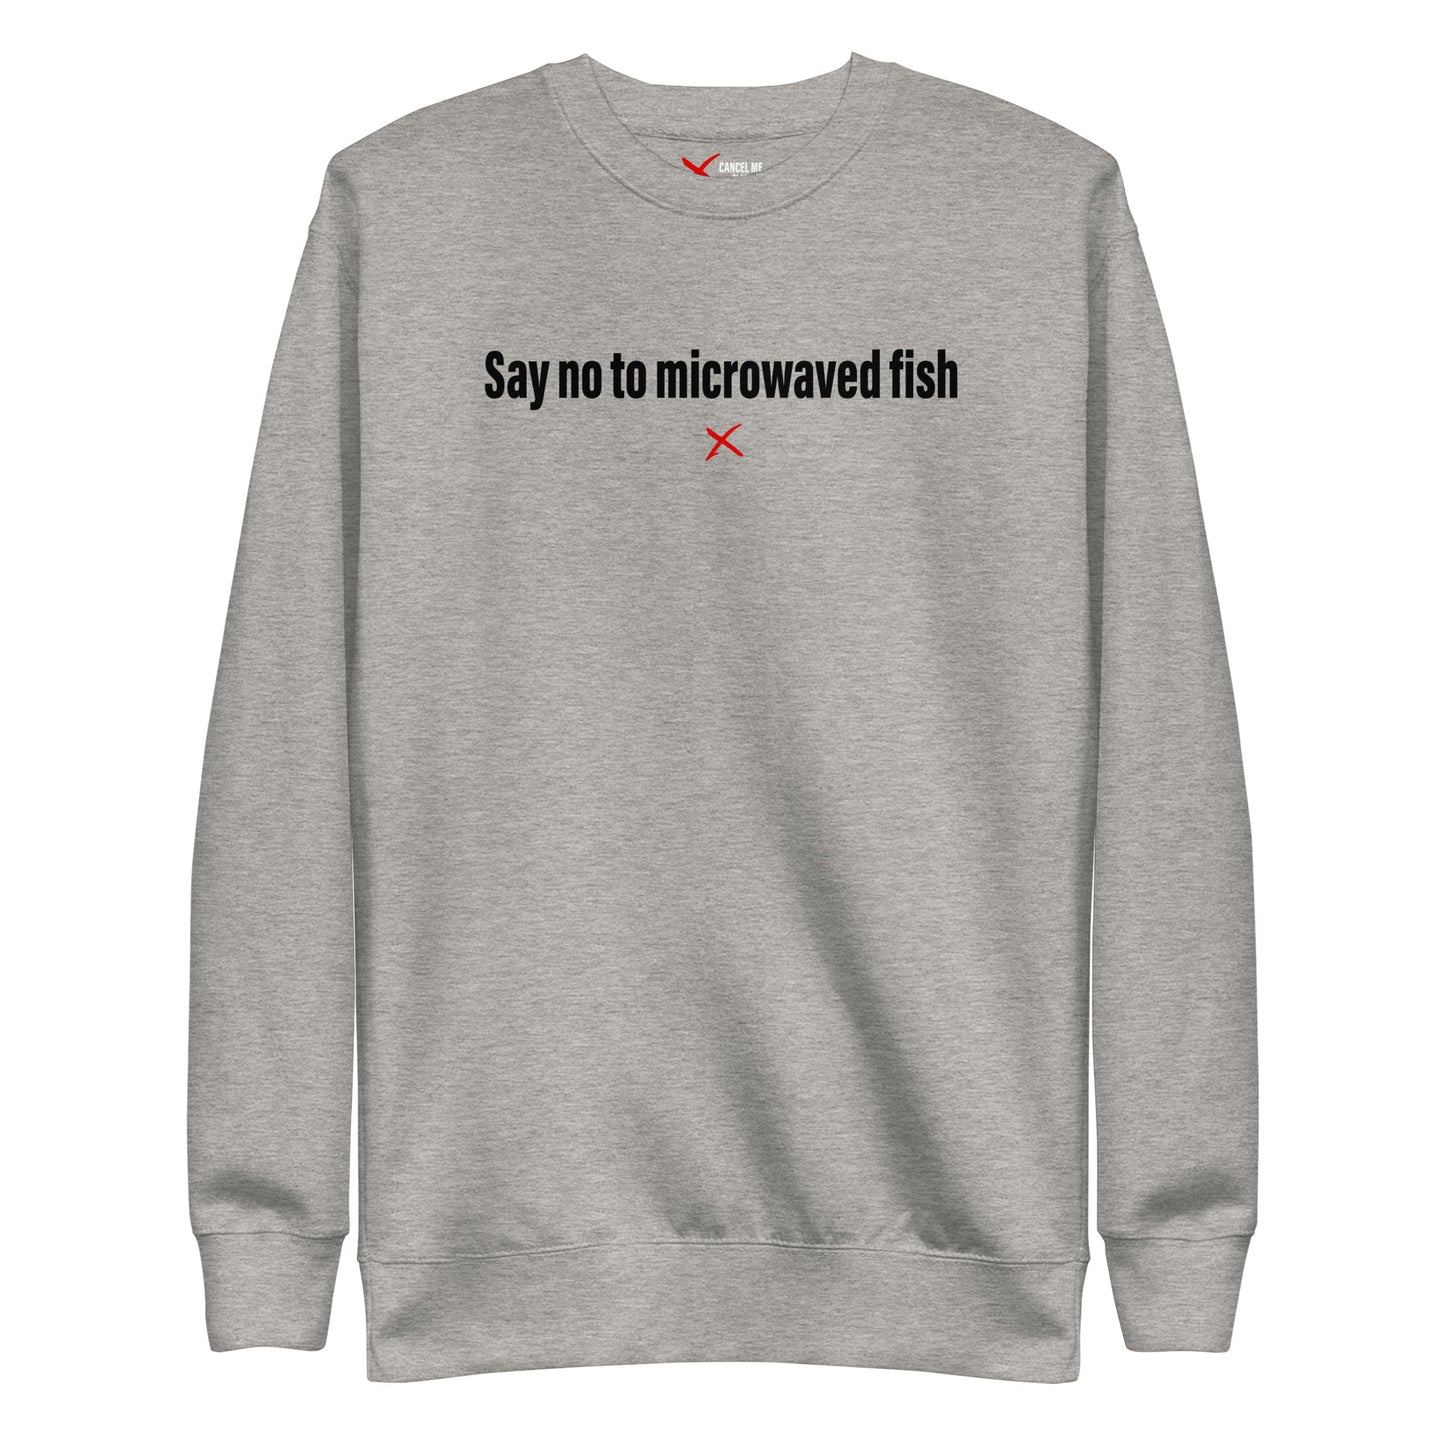 Say no to microwaved fish - Sweatshirt